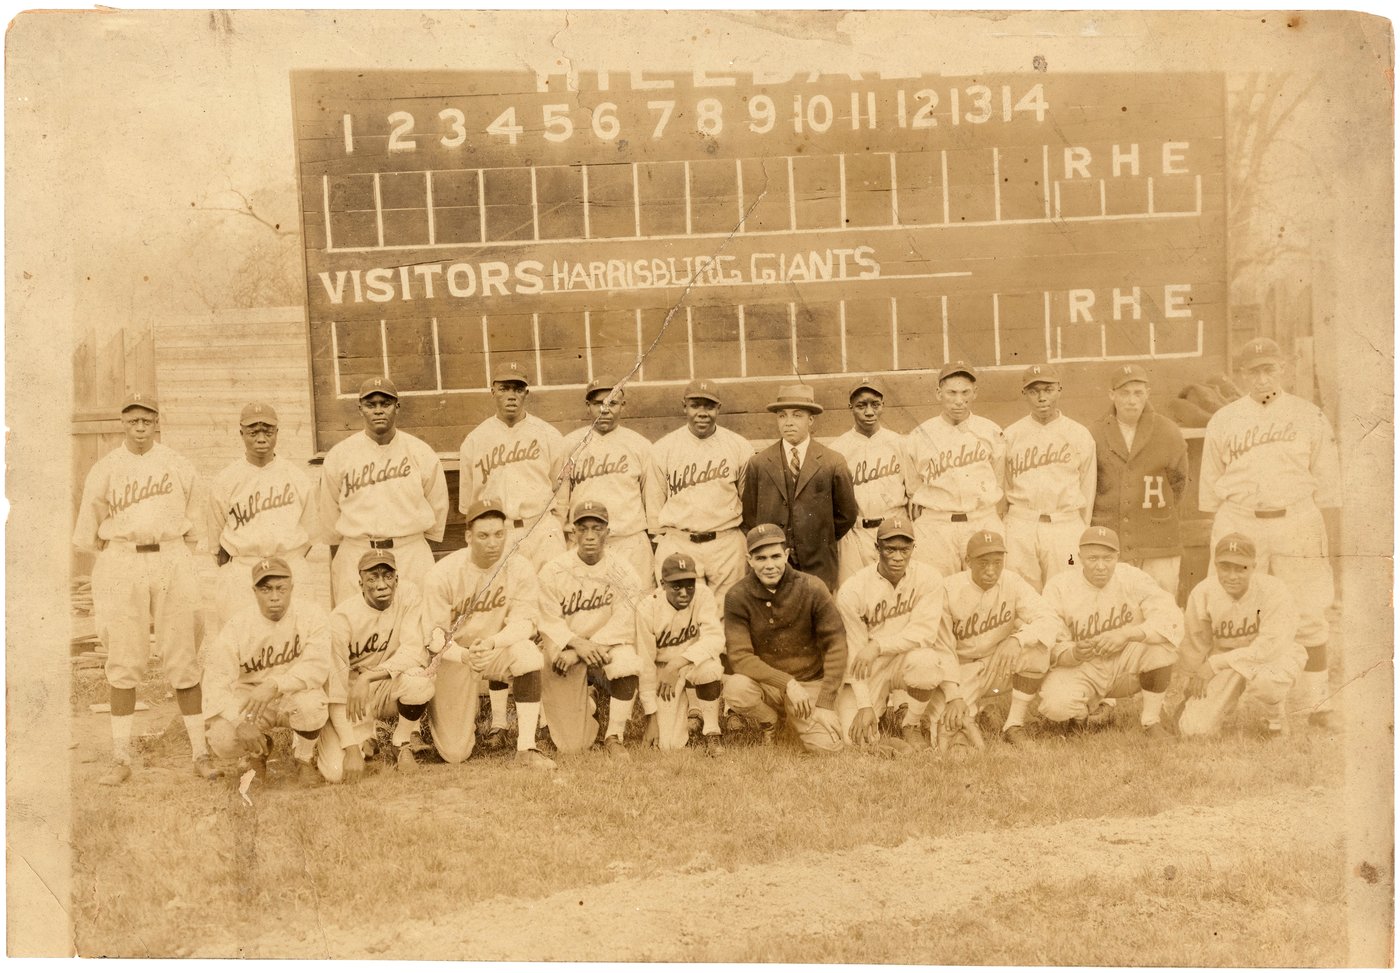 1924 NY Giants Baseball Team by Underwood Archives